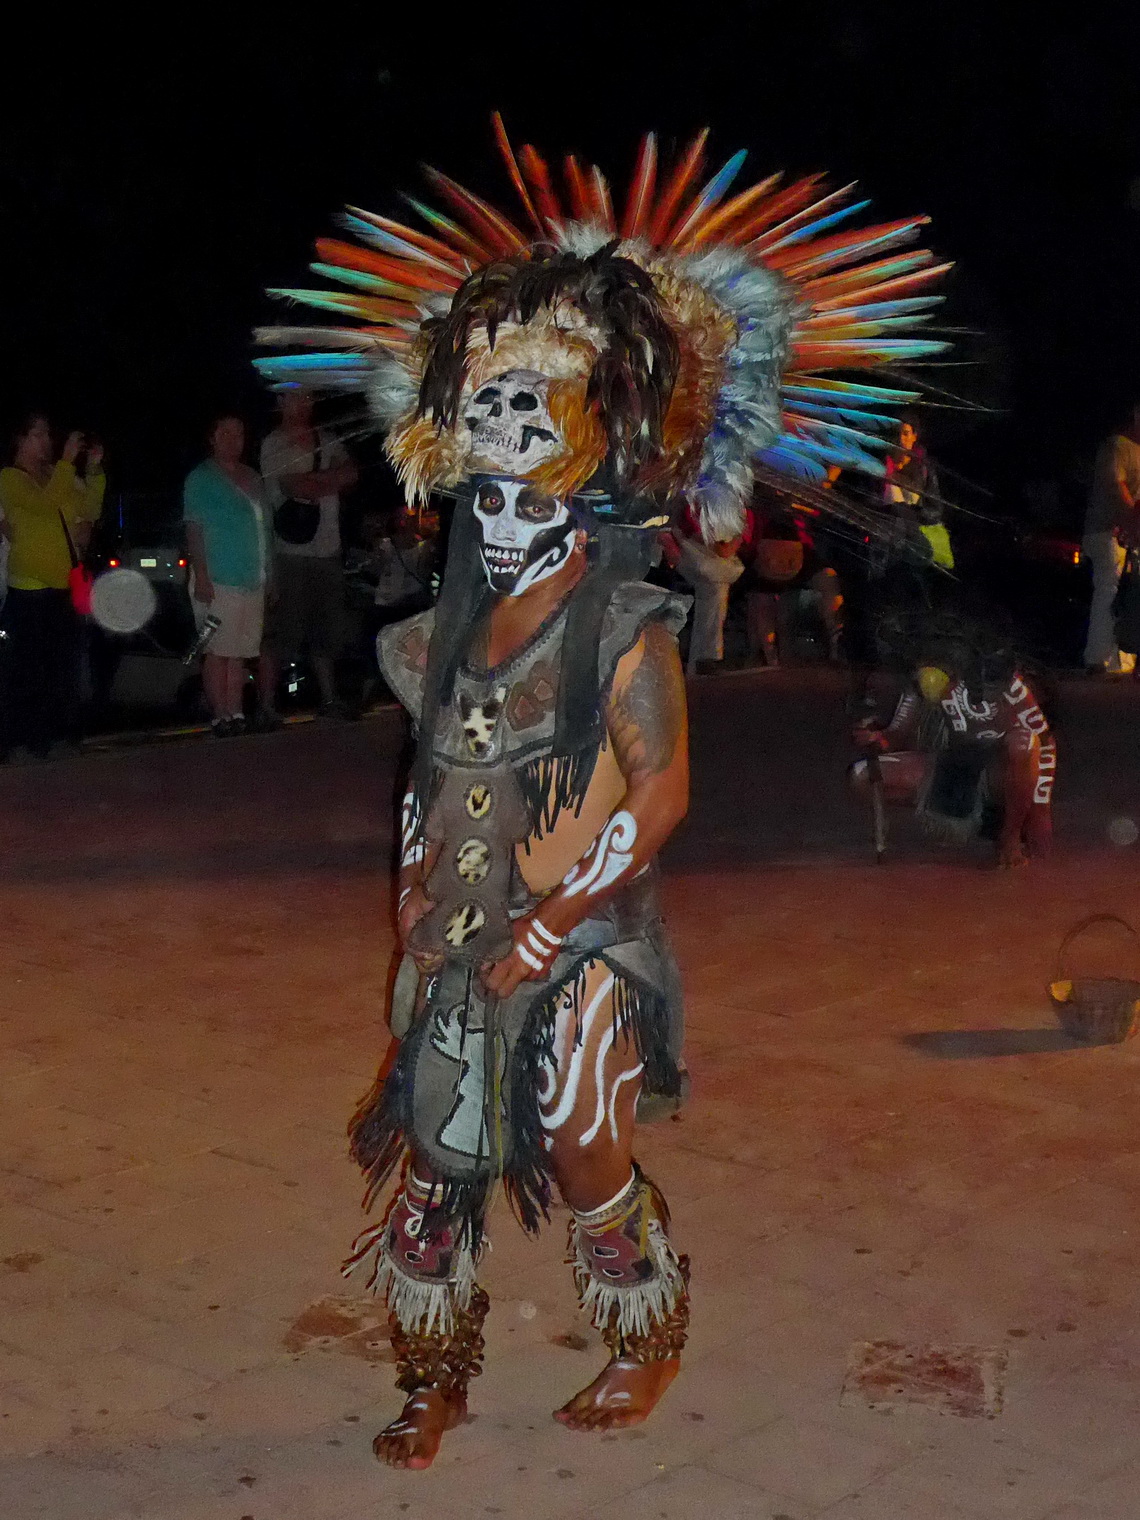 Dancing Maya shaman in front of the entrance